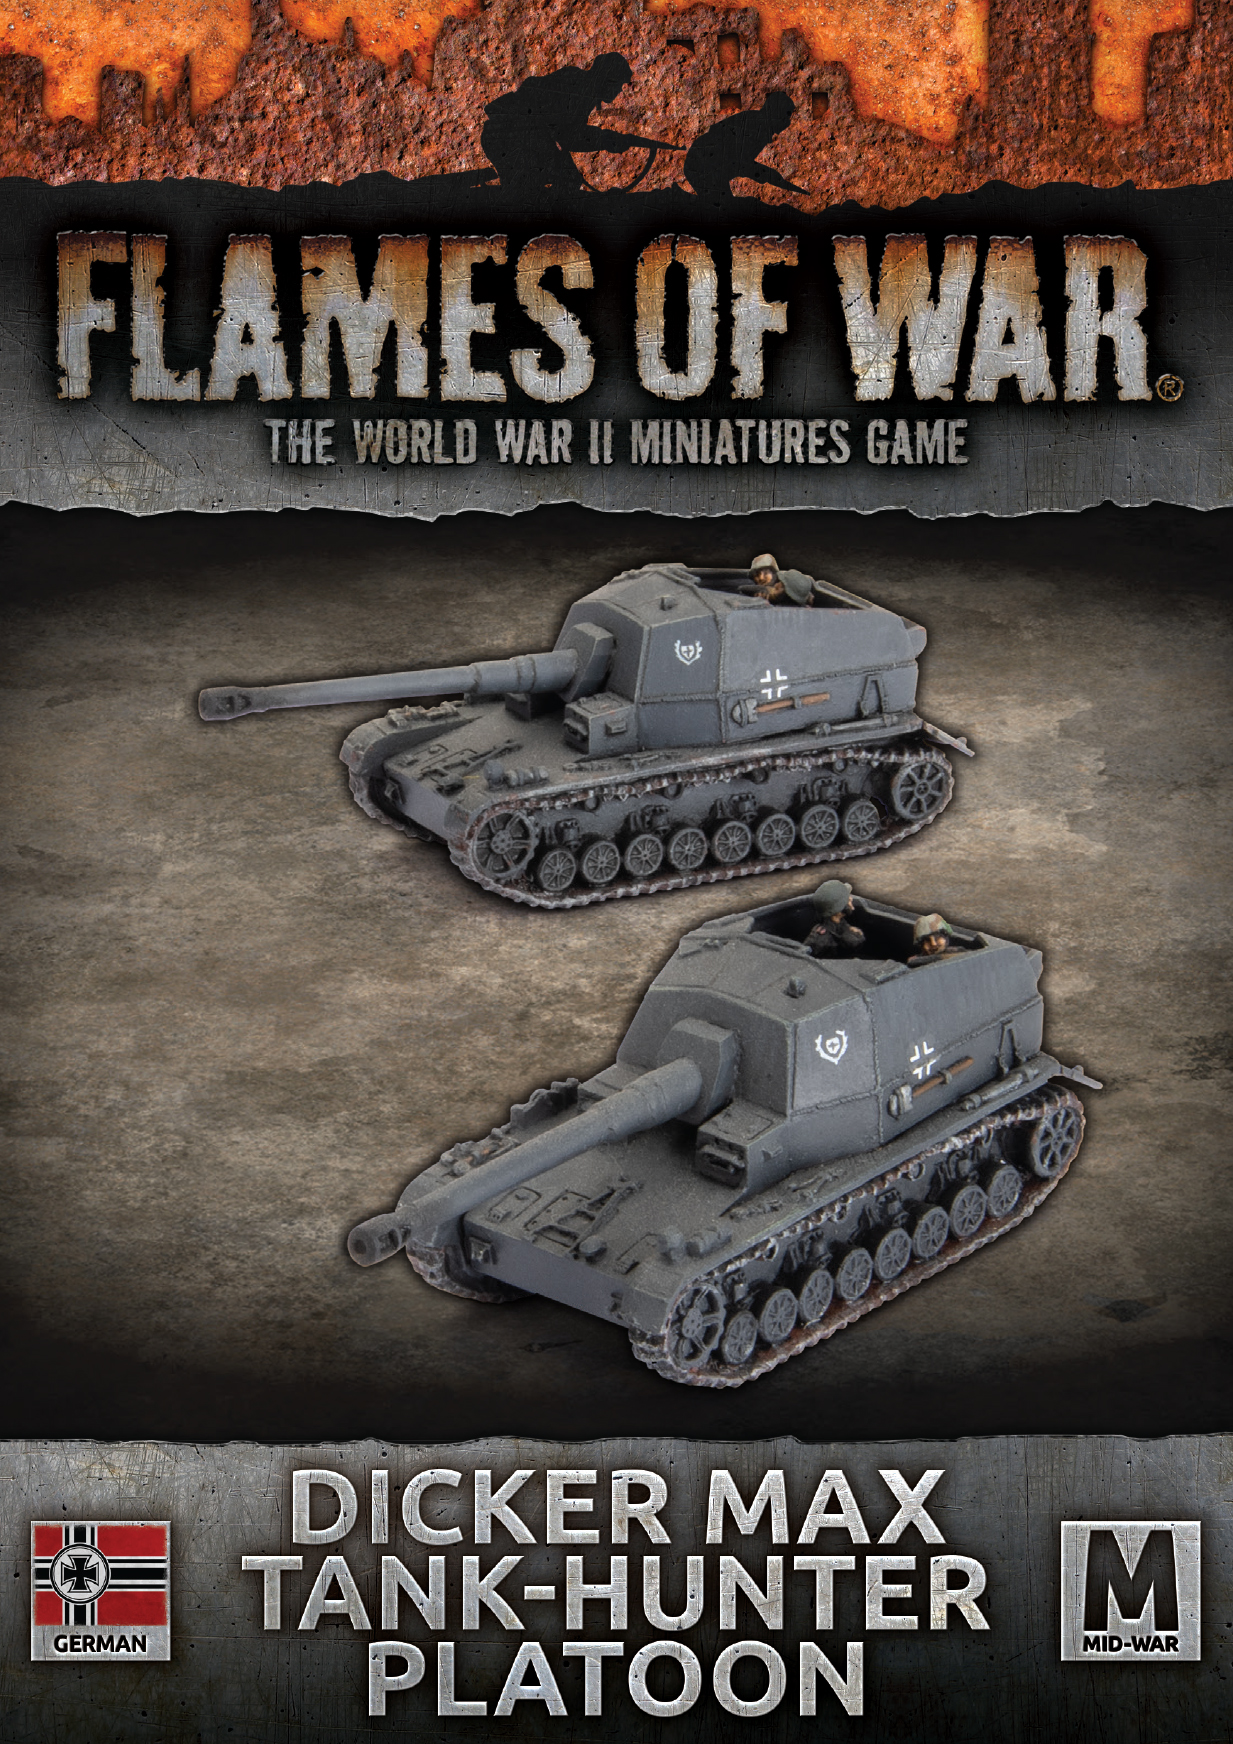 Dicker Max Tank-Hunter Platoon - Flames Of War